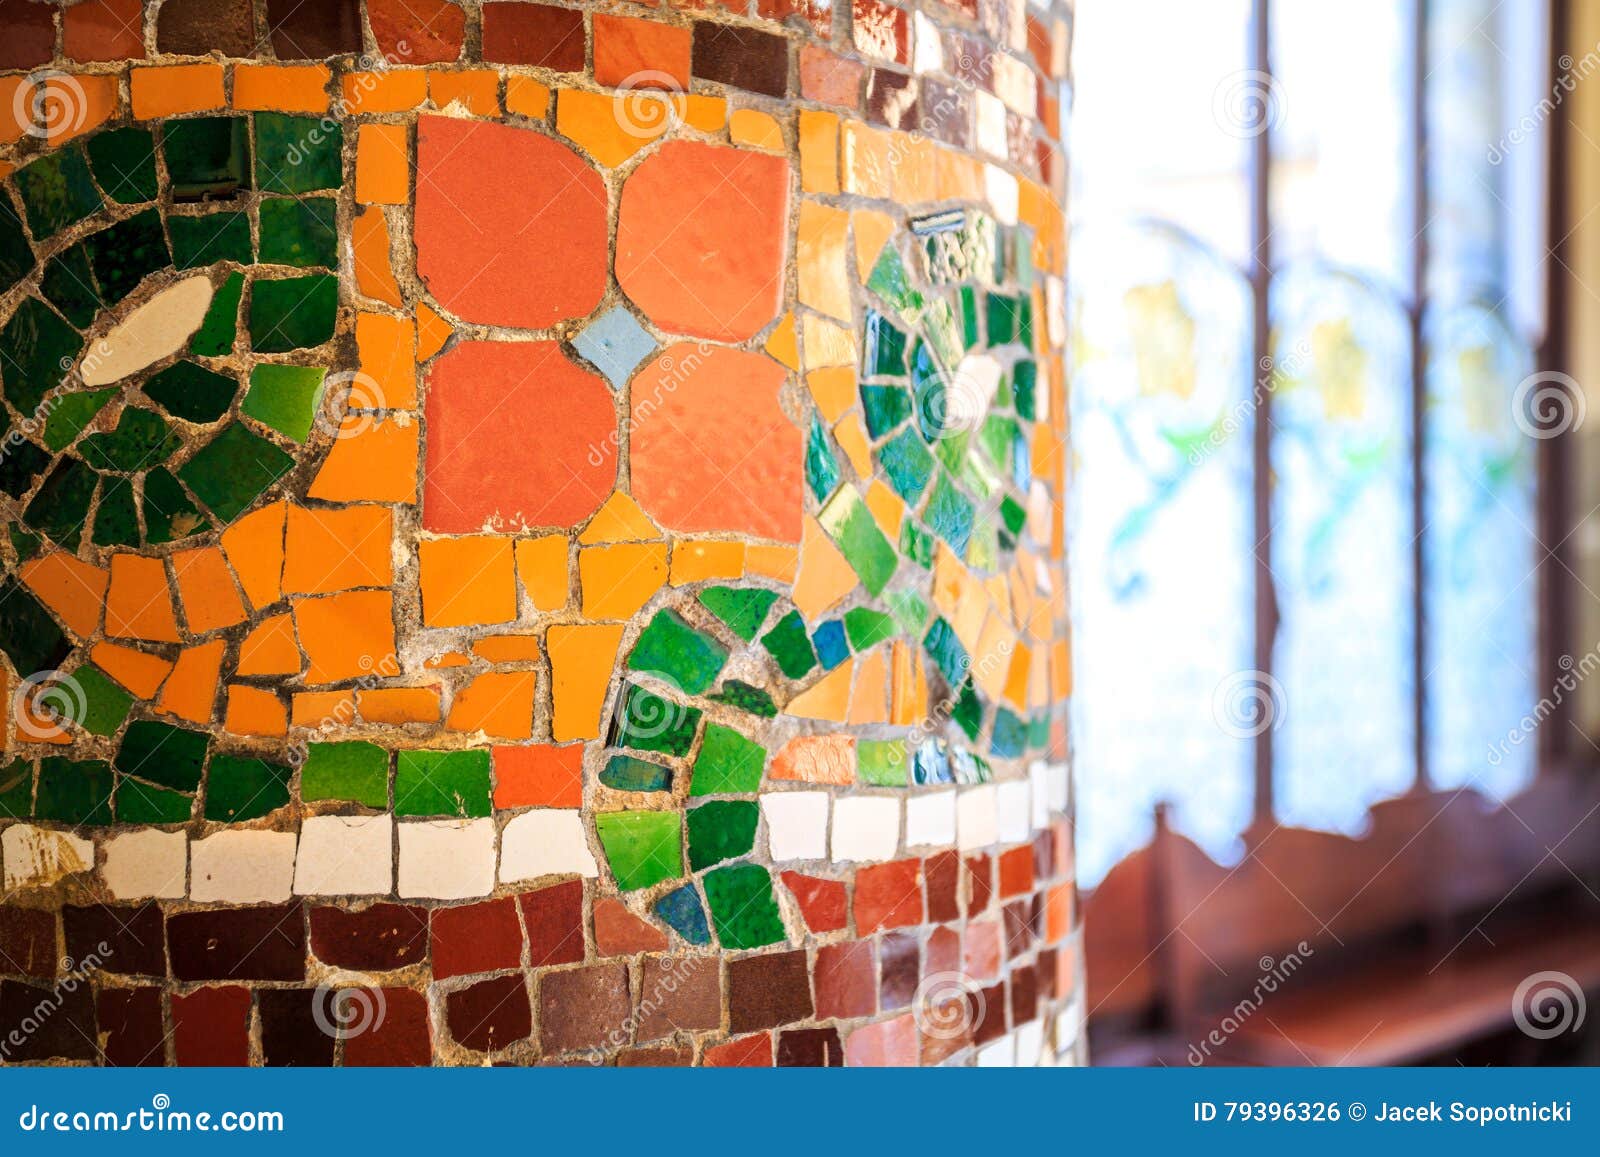 mosaic and stained glass, palau de la musica, barcelona, spain